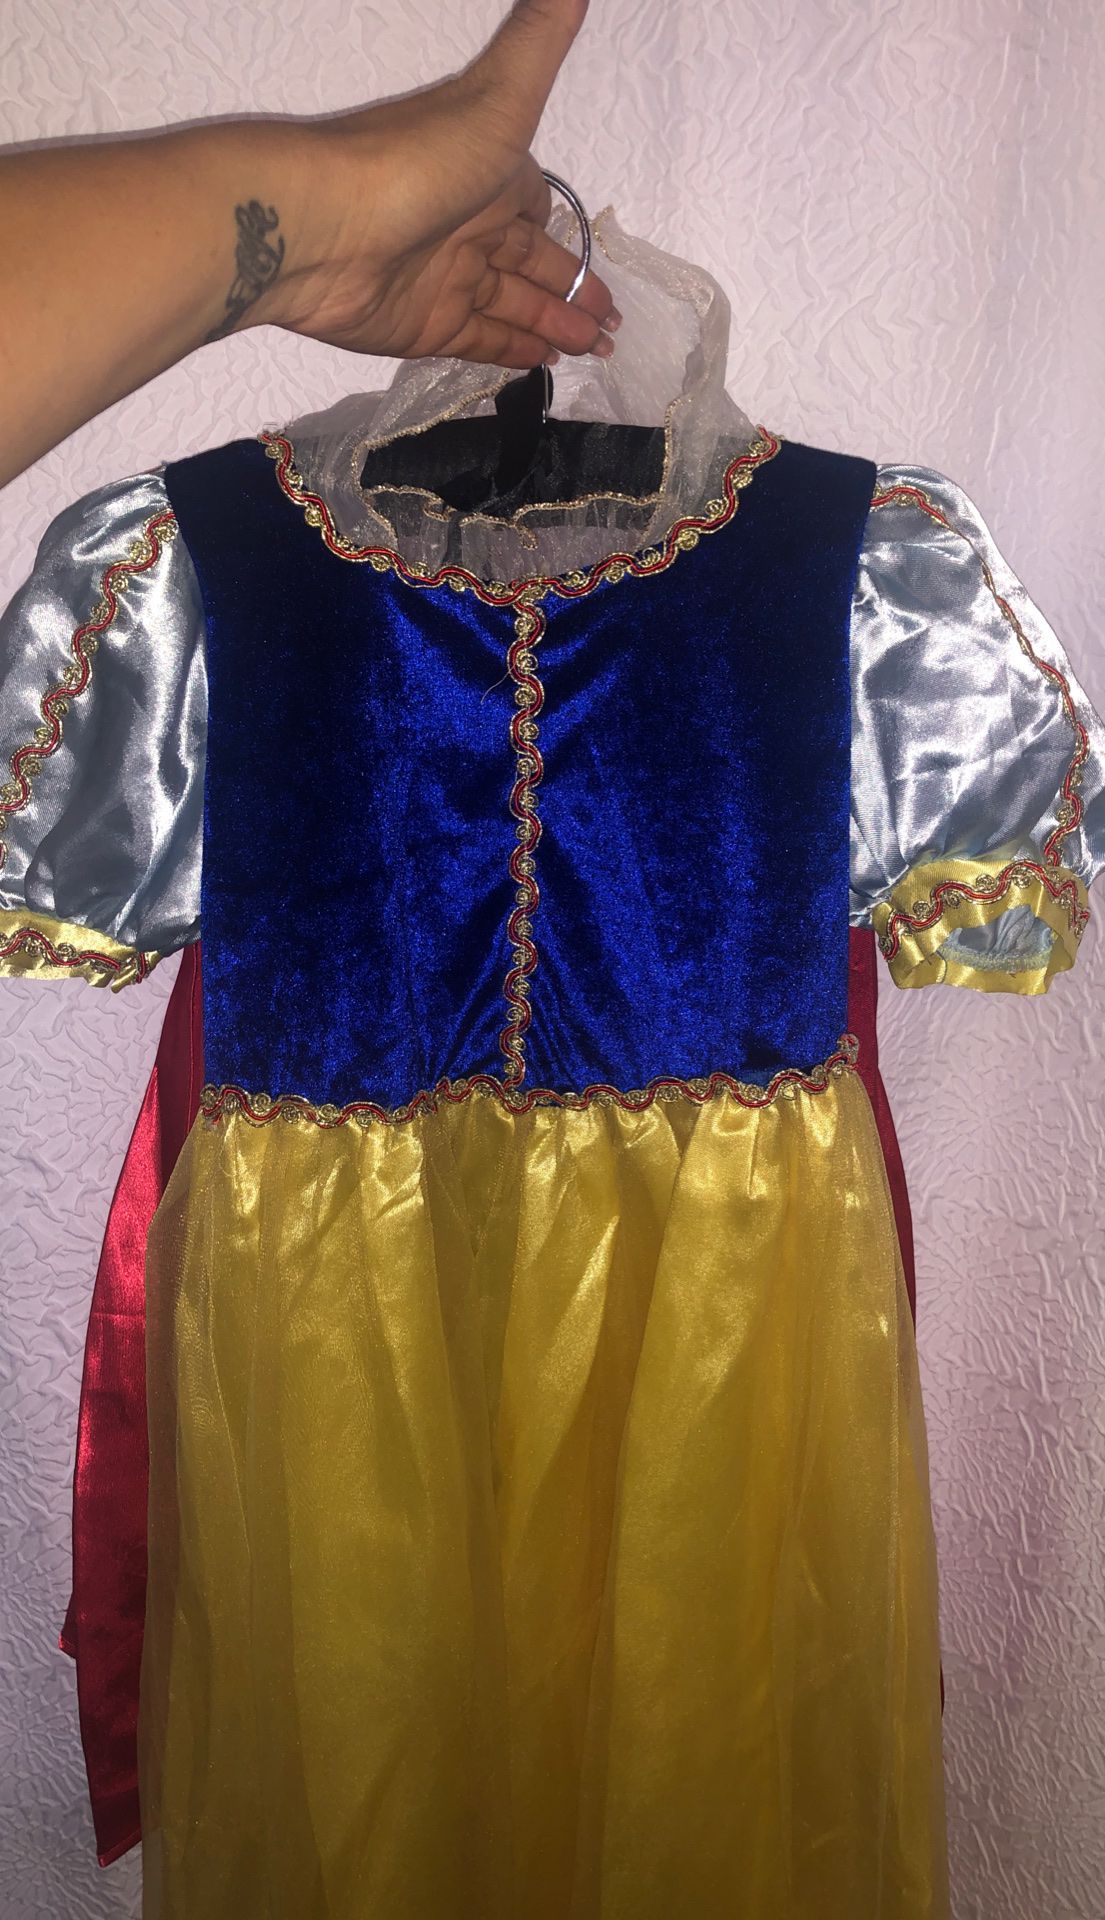 Disney Snow White costume in excellent condition